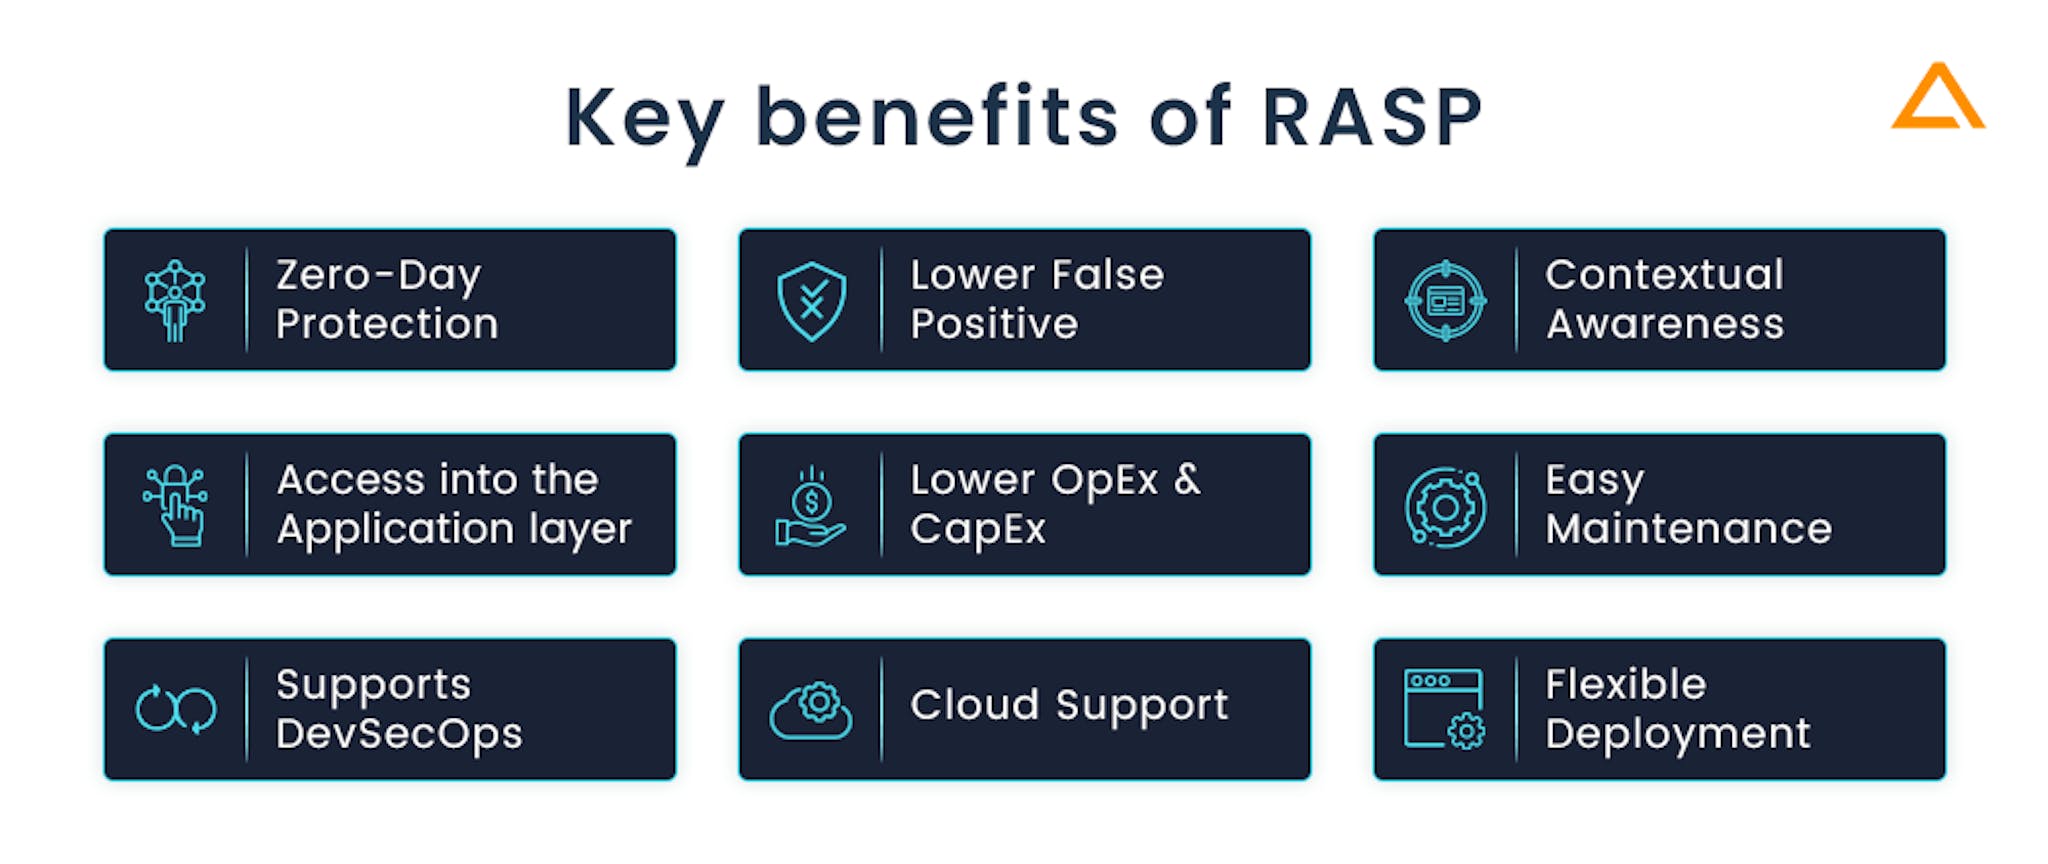 Key benefits of RASP